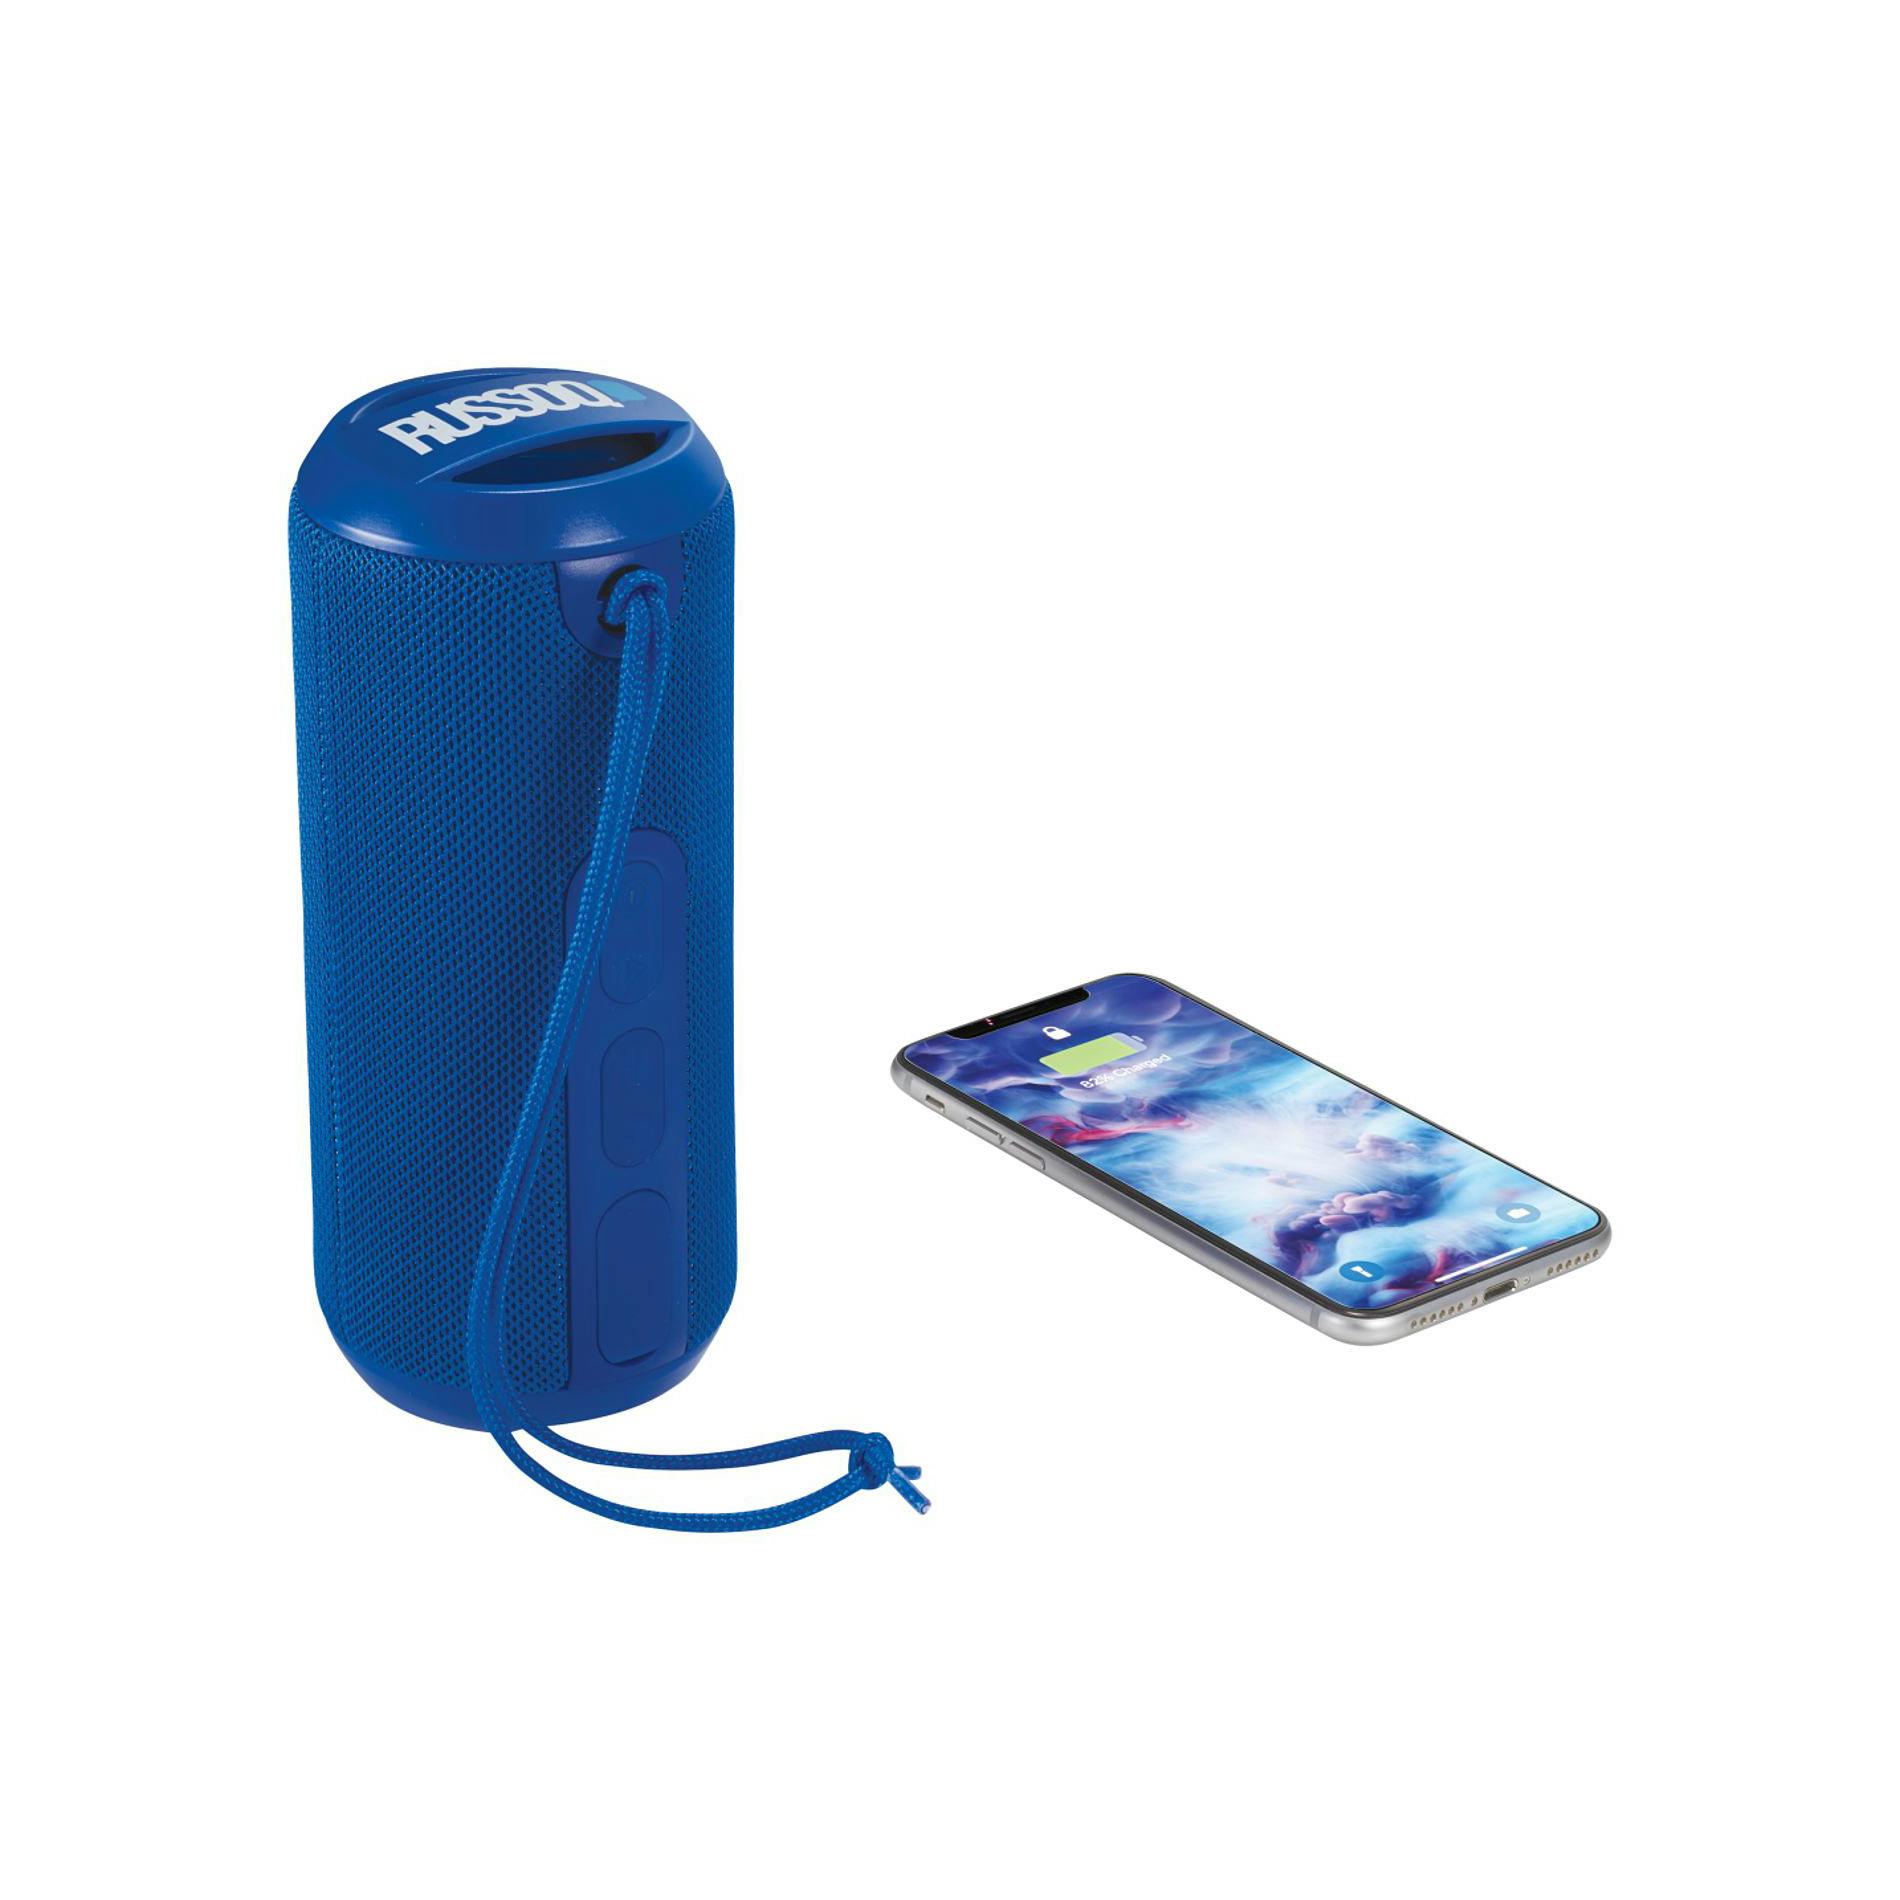 Rugged Fabric Outdoor Waterproof Bluetooth Speaker - additional Image 5